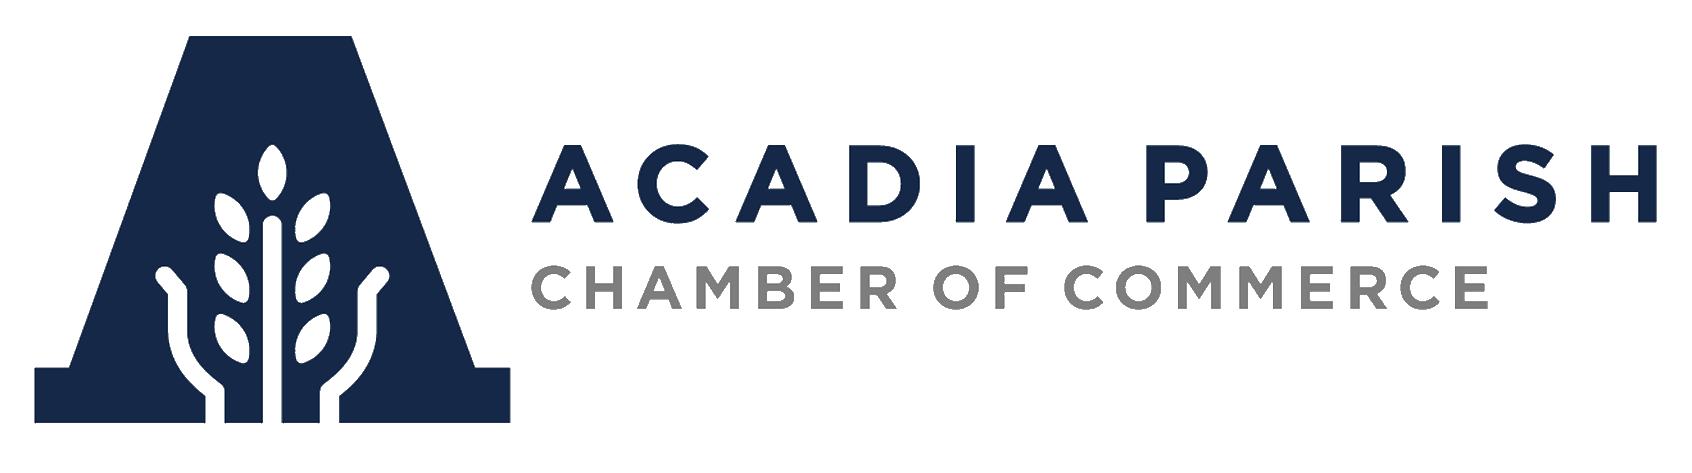 Acadia Parish Chamber of Commerce